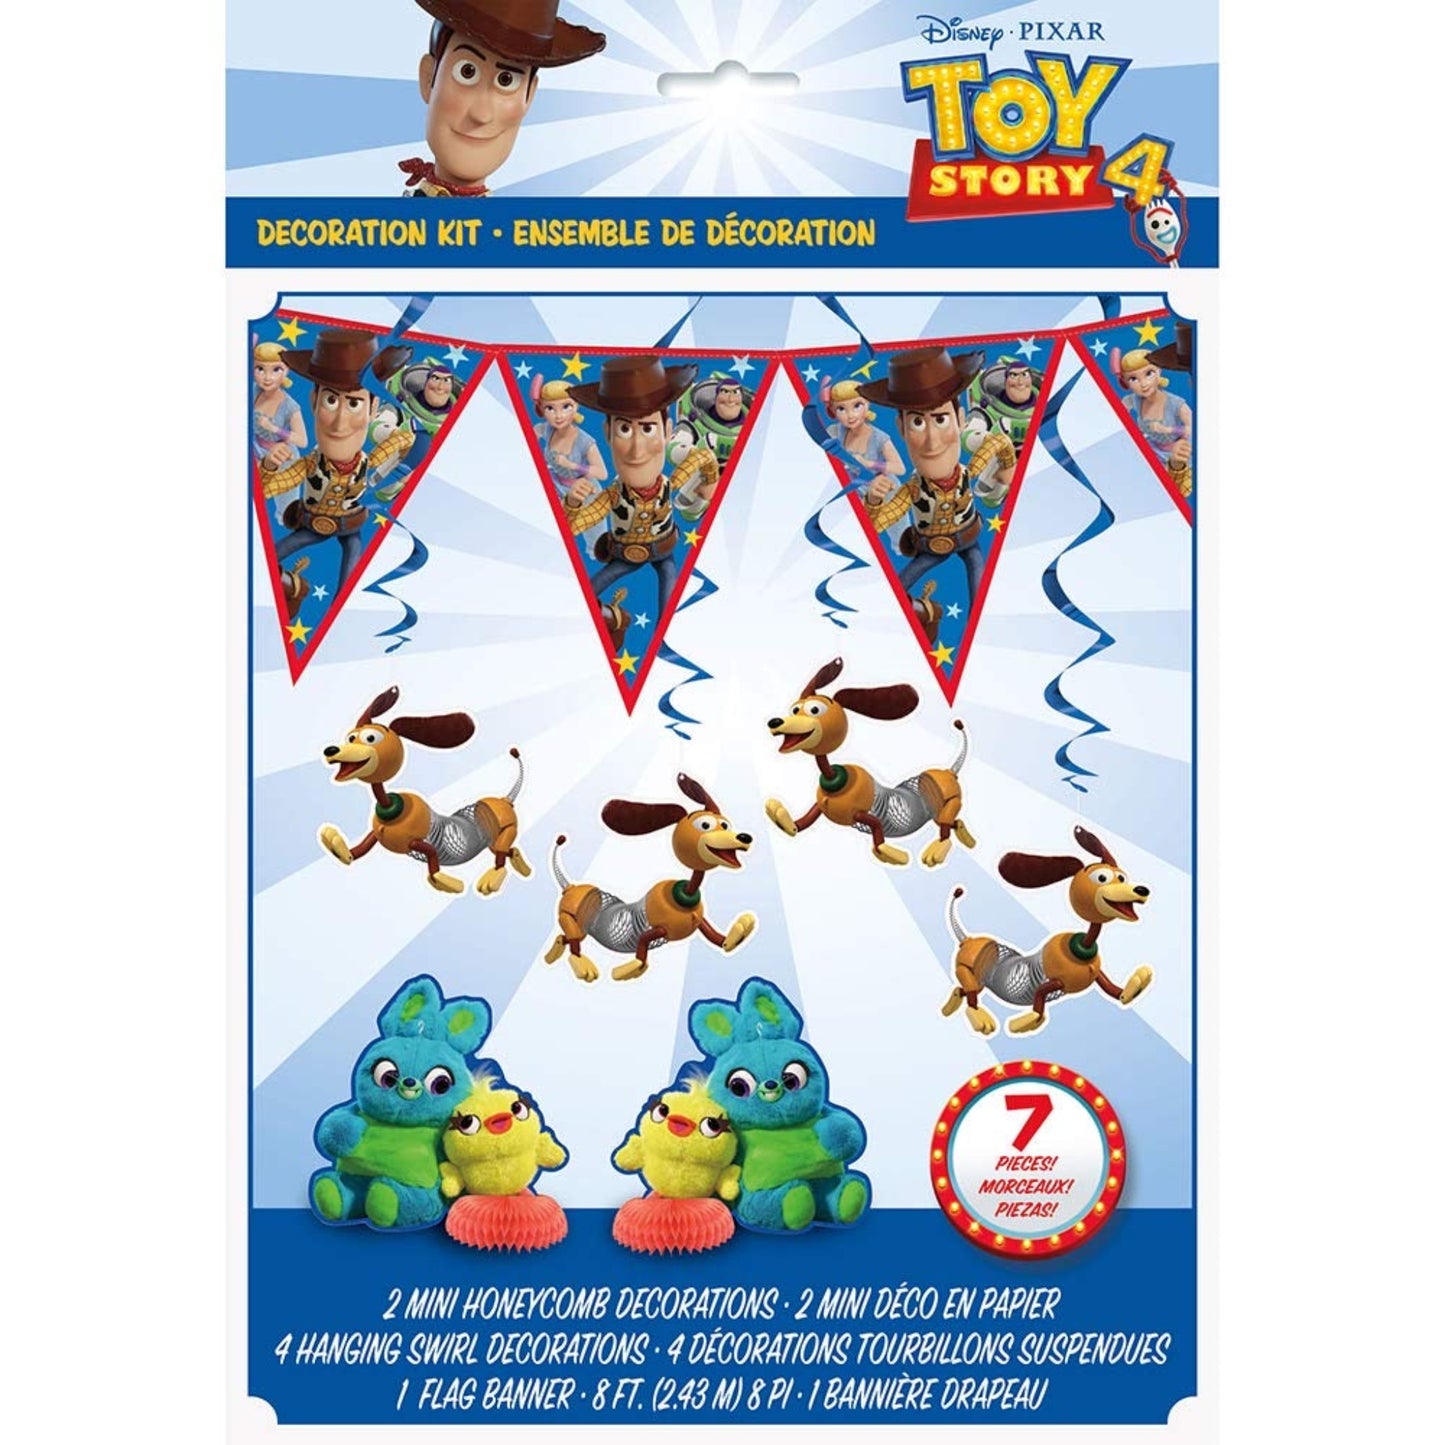 Disney's Toy Story 4 Decorating Kit